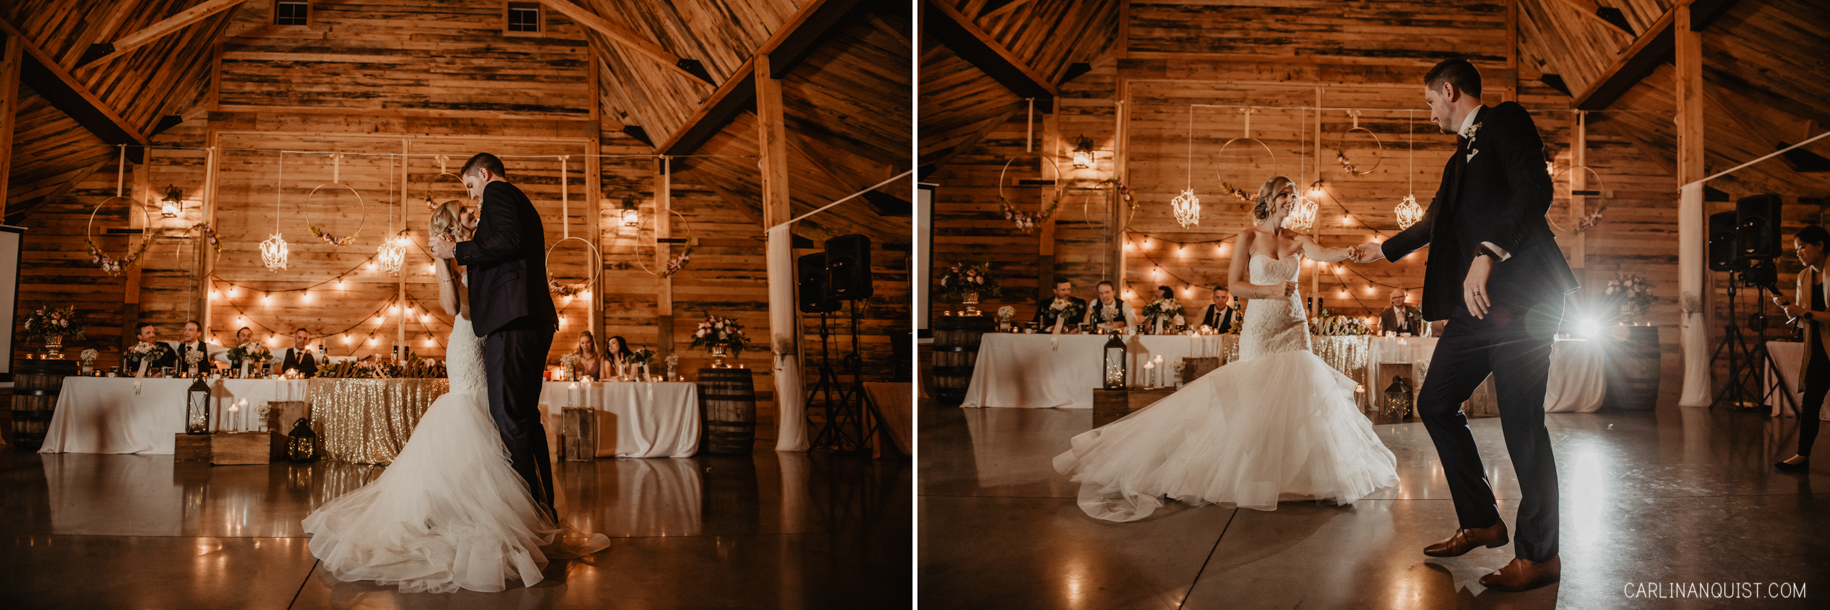 First Dance | Willow Lane Barn Wedding Photos